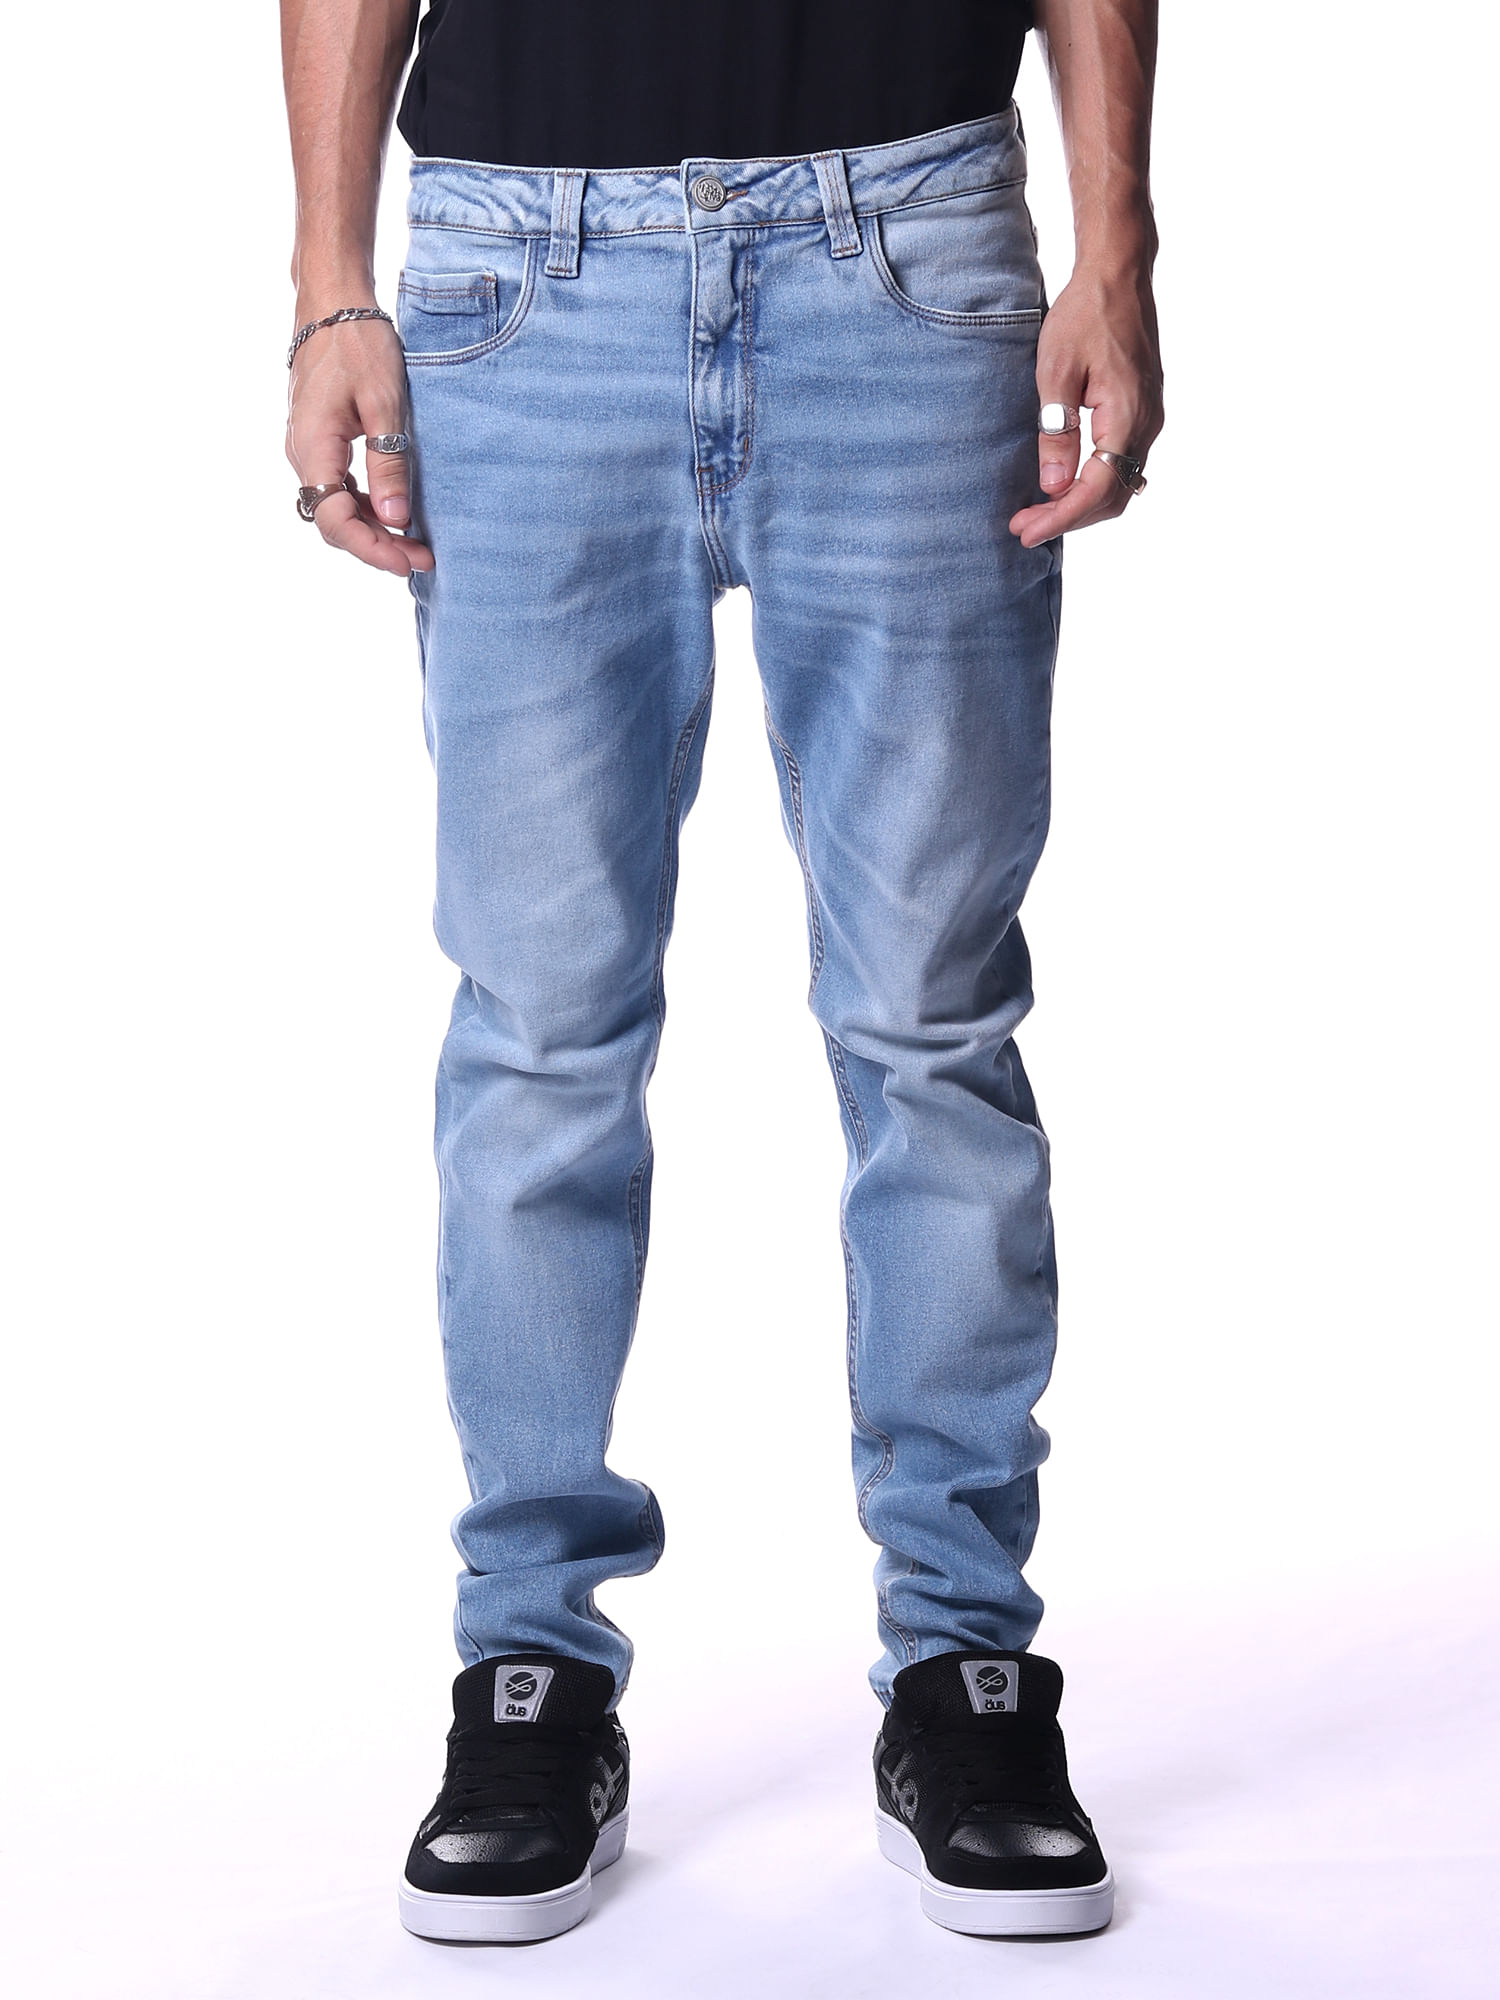 Calca-bali-hai-jeans-skinny-Jeans